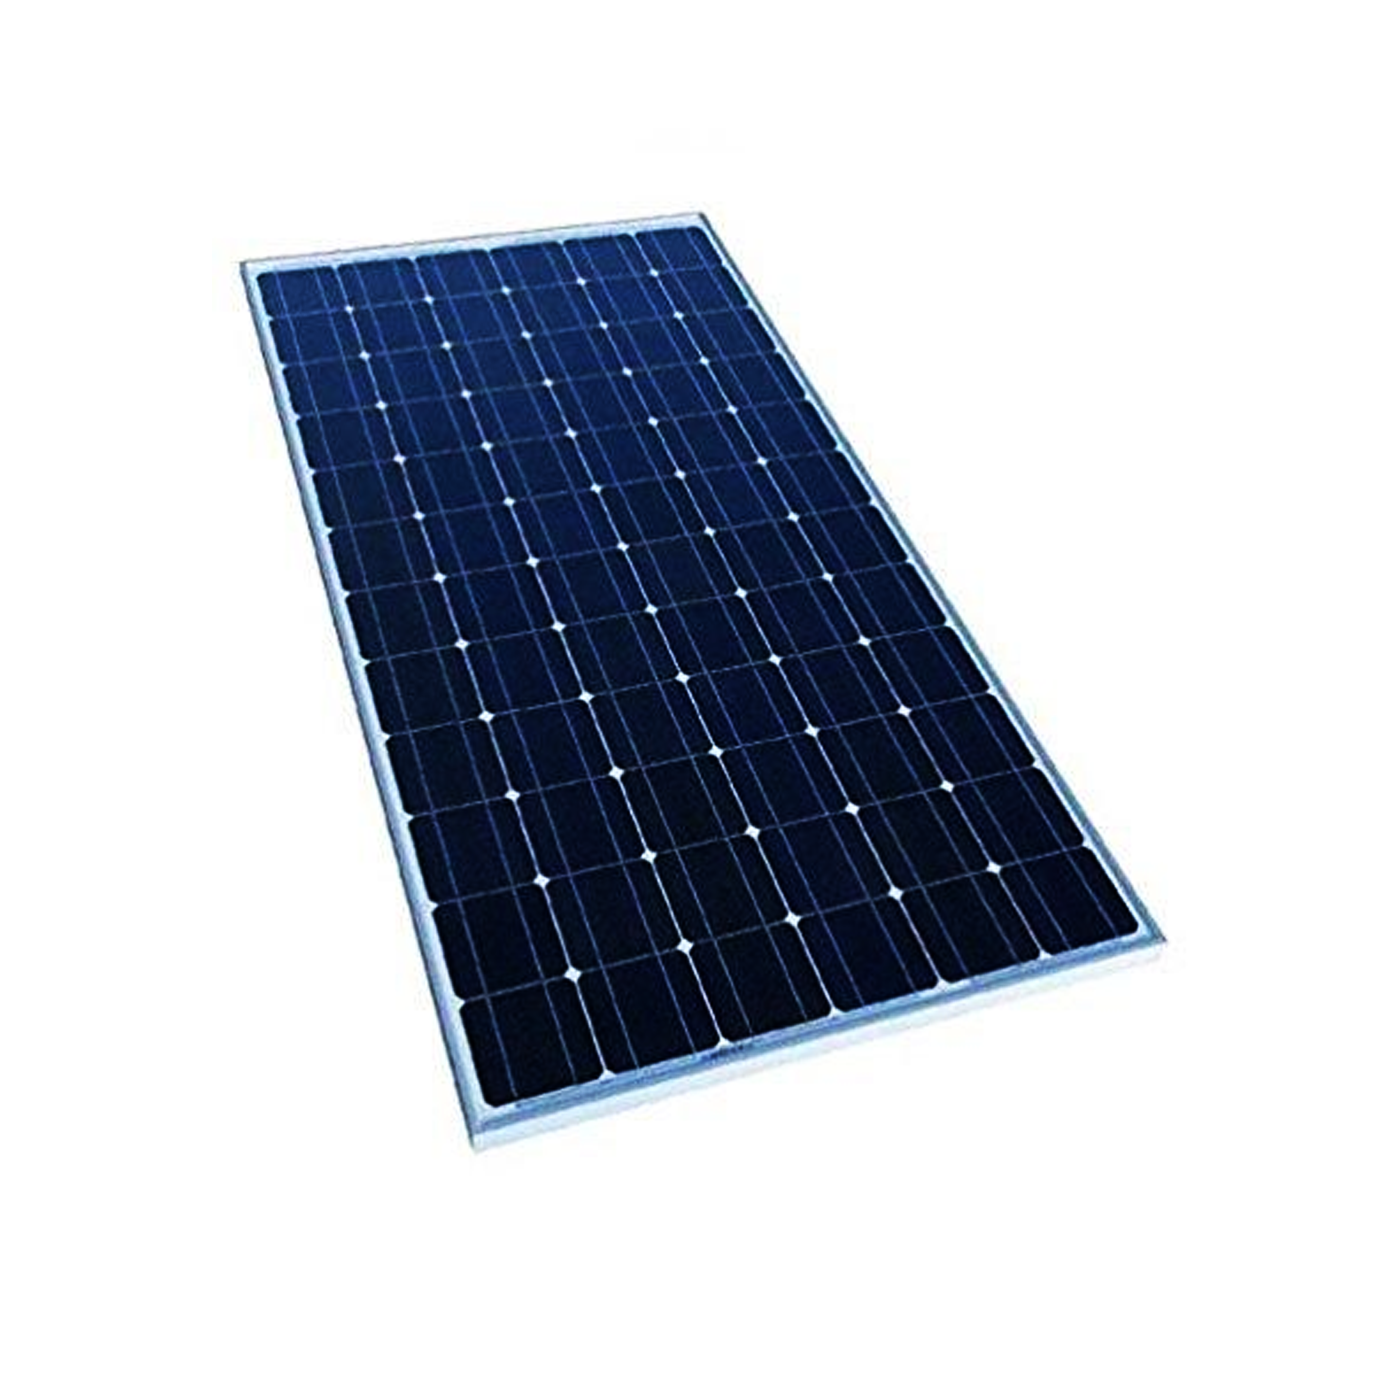 Detec™ Poly crystalline Solar Panel